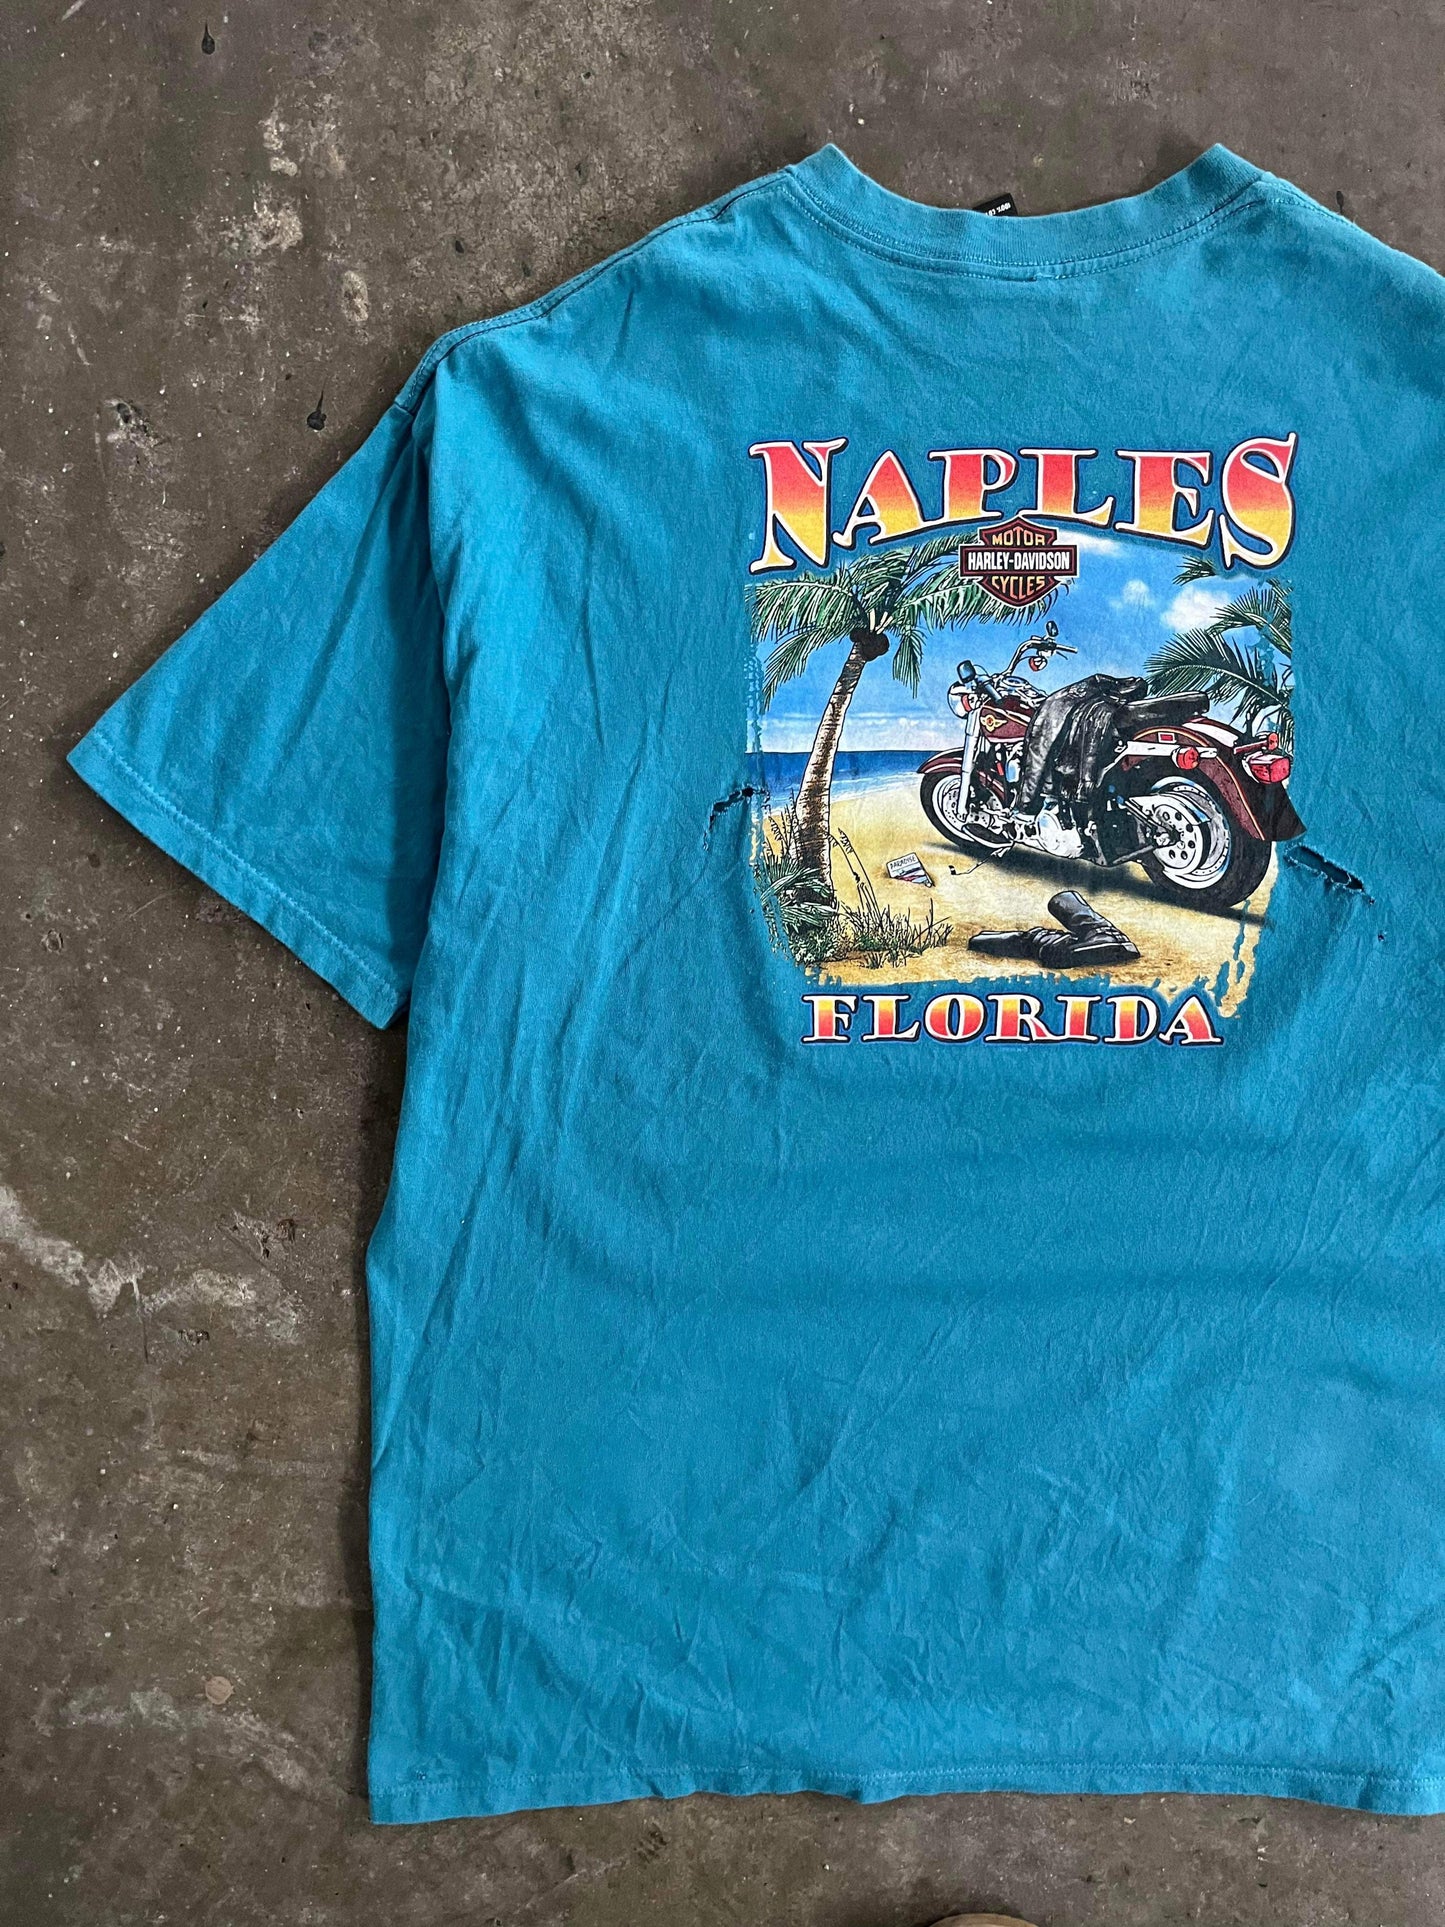 ~ (3X) Distressed 2000 Naples Harley Davidson Tee